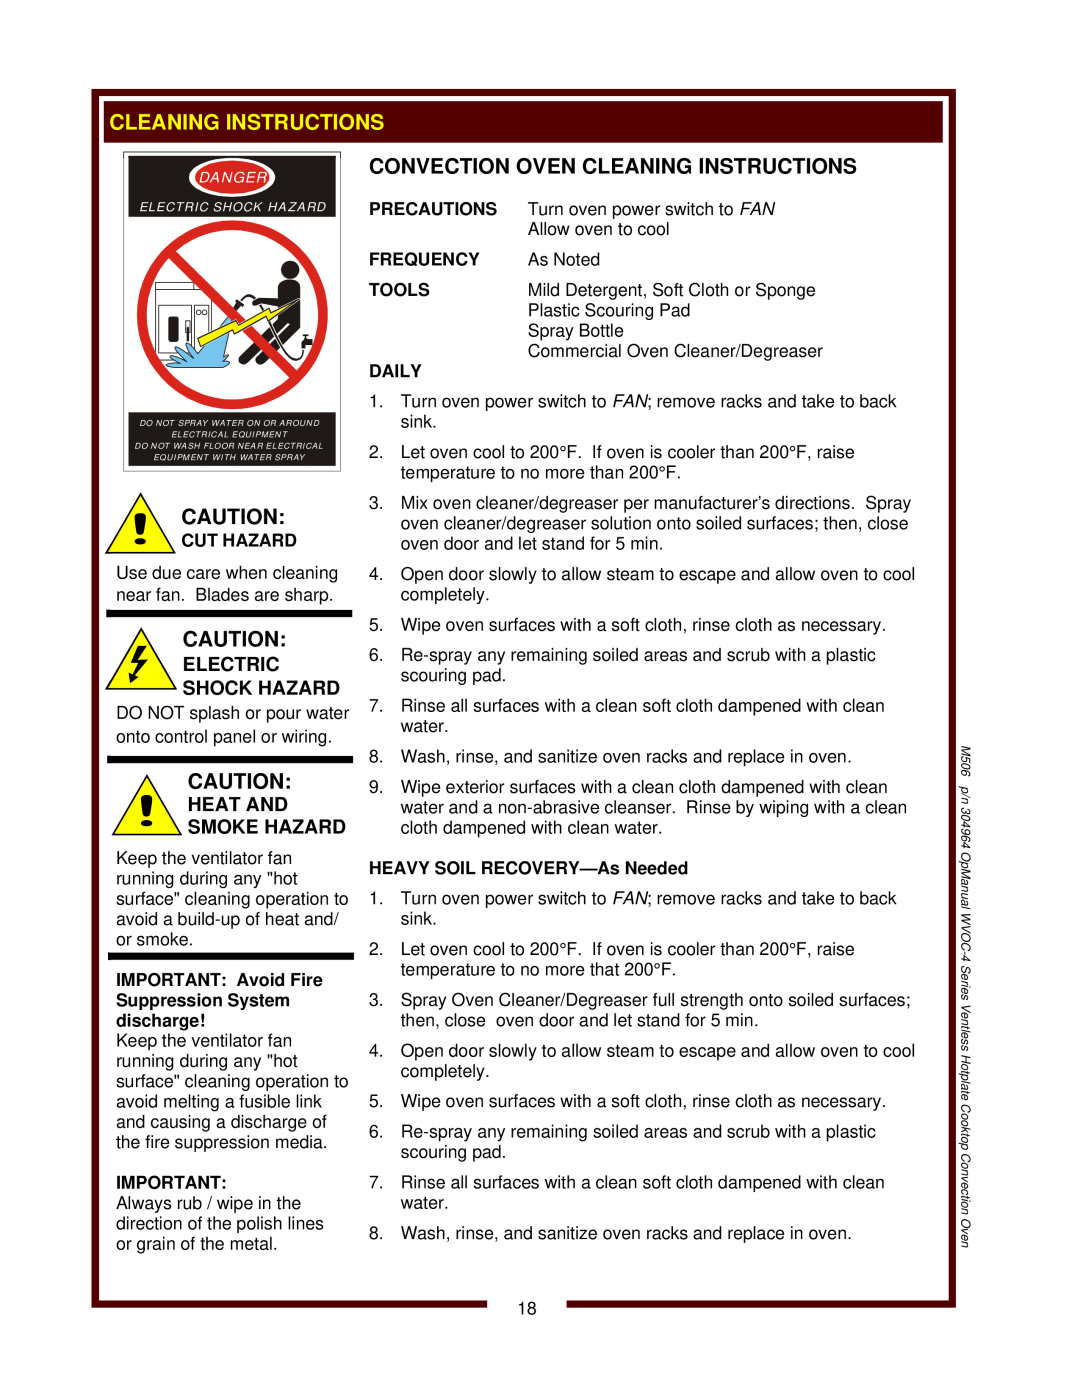 Wells WVOC-4HS Convection Oven Cleaning Instructions, Electric Shock Hazard, Heat And Smoke Hazard, Cut Hazard, Tools 